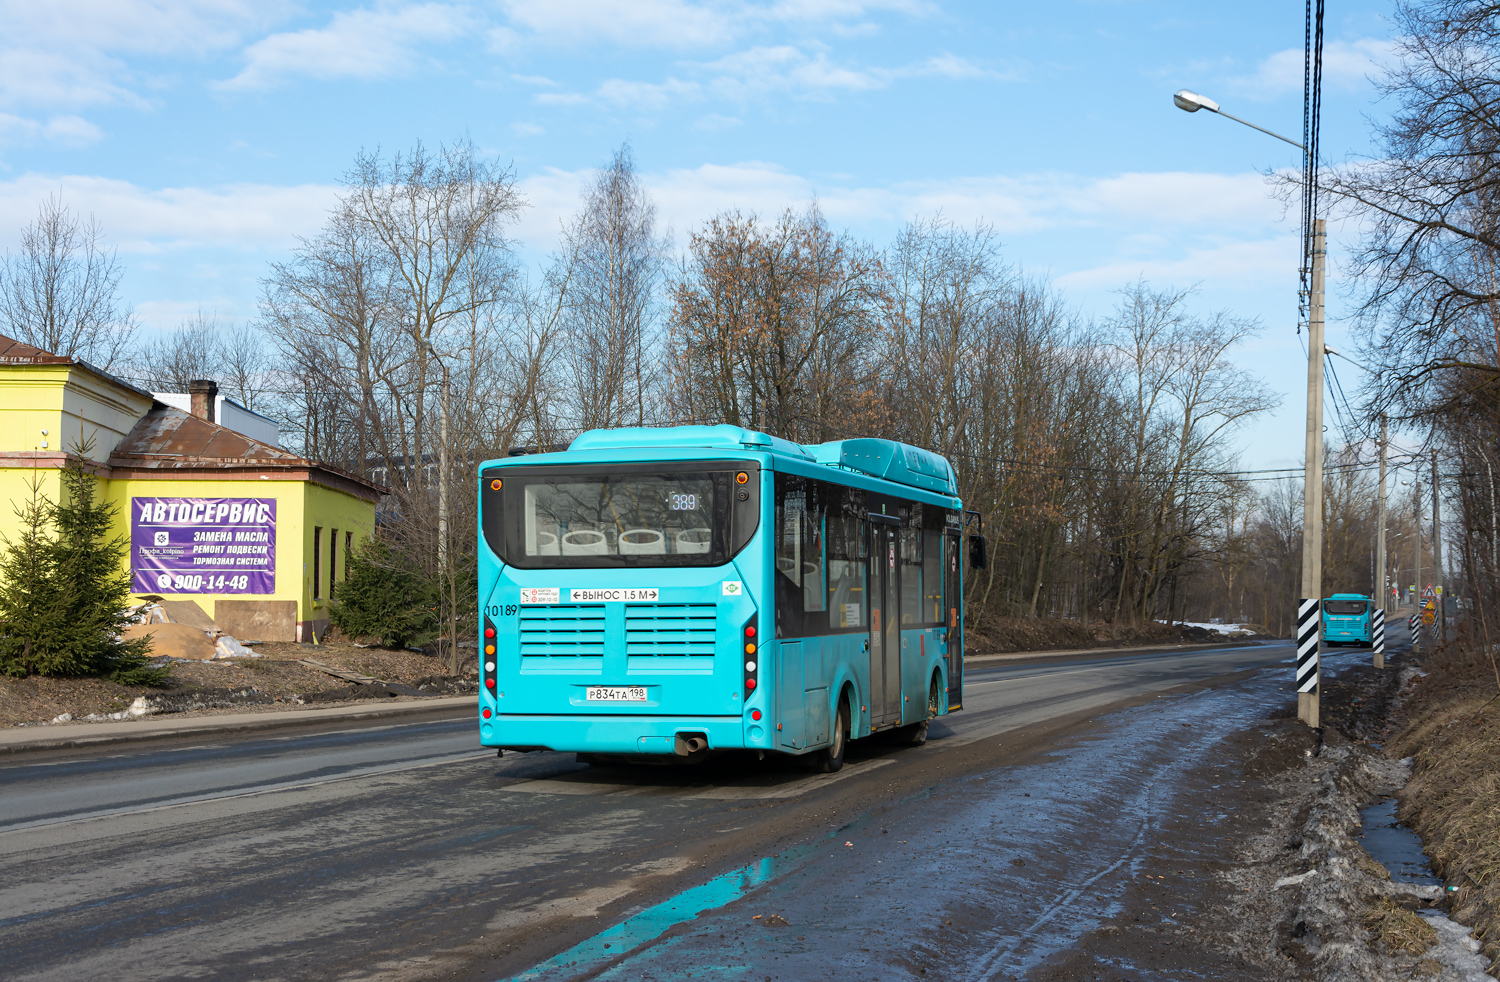 Saint Petersburg, Volgabus-4298.G4 (CNG) # 10189